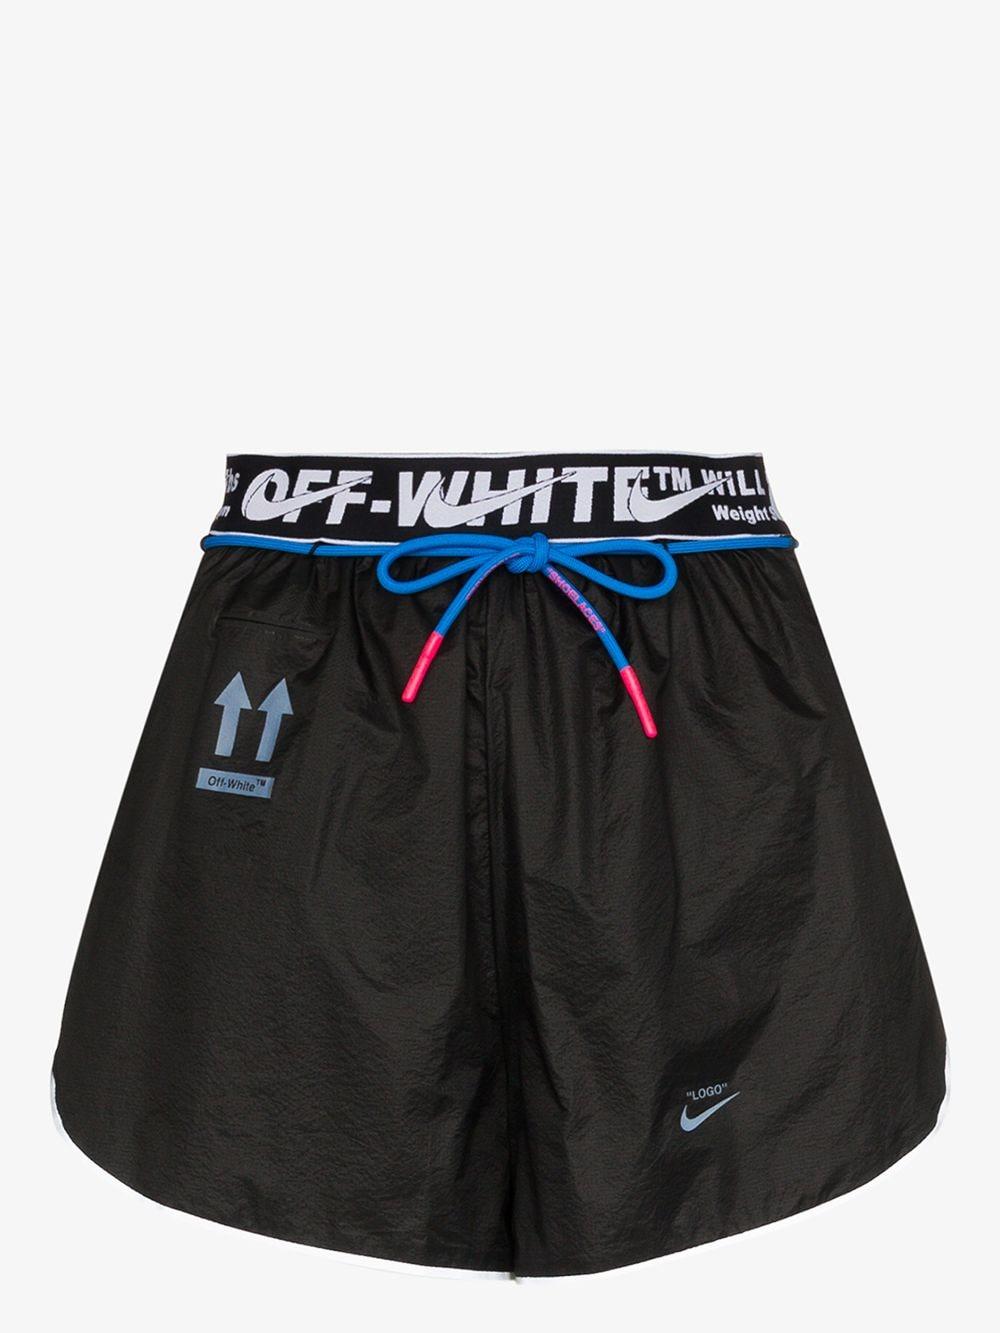 off white nike running shorts